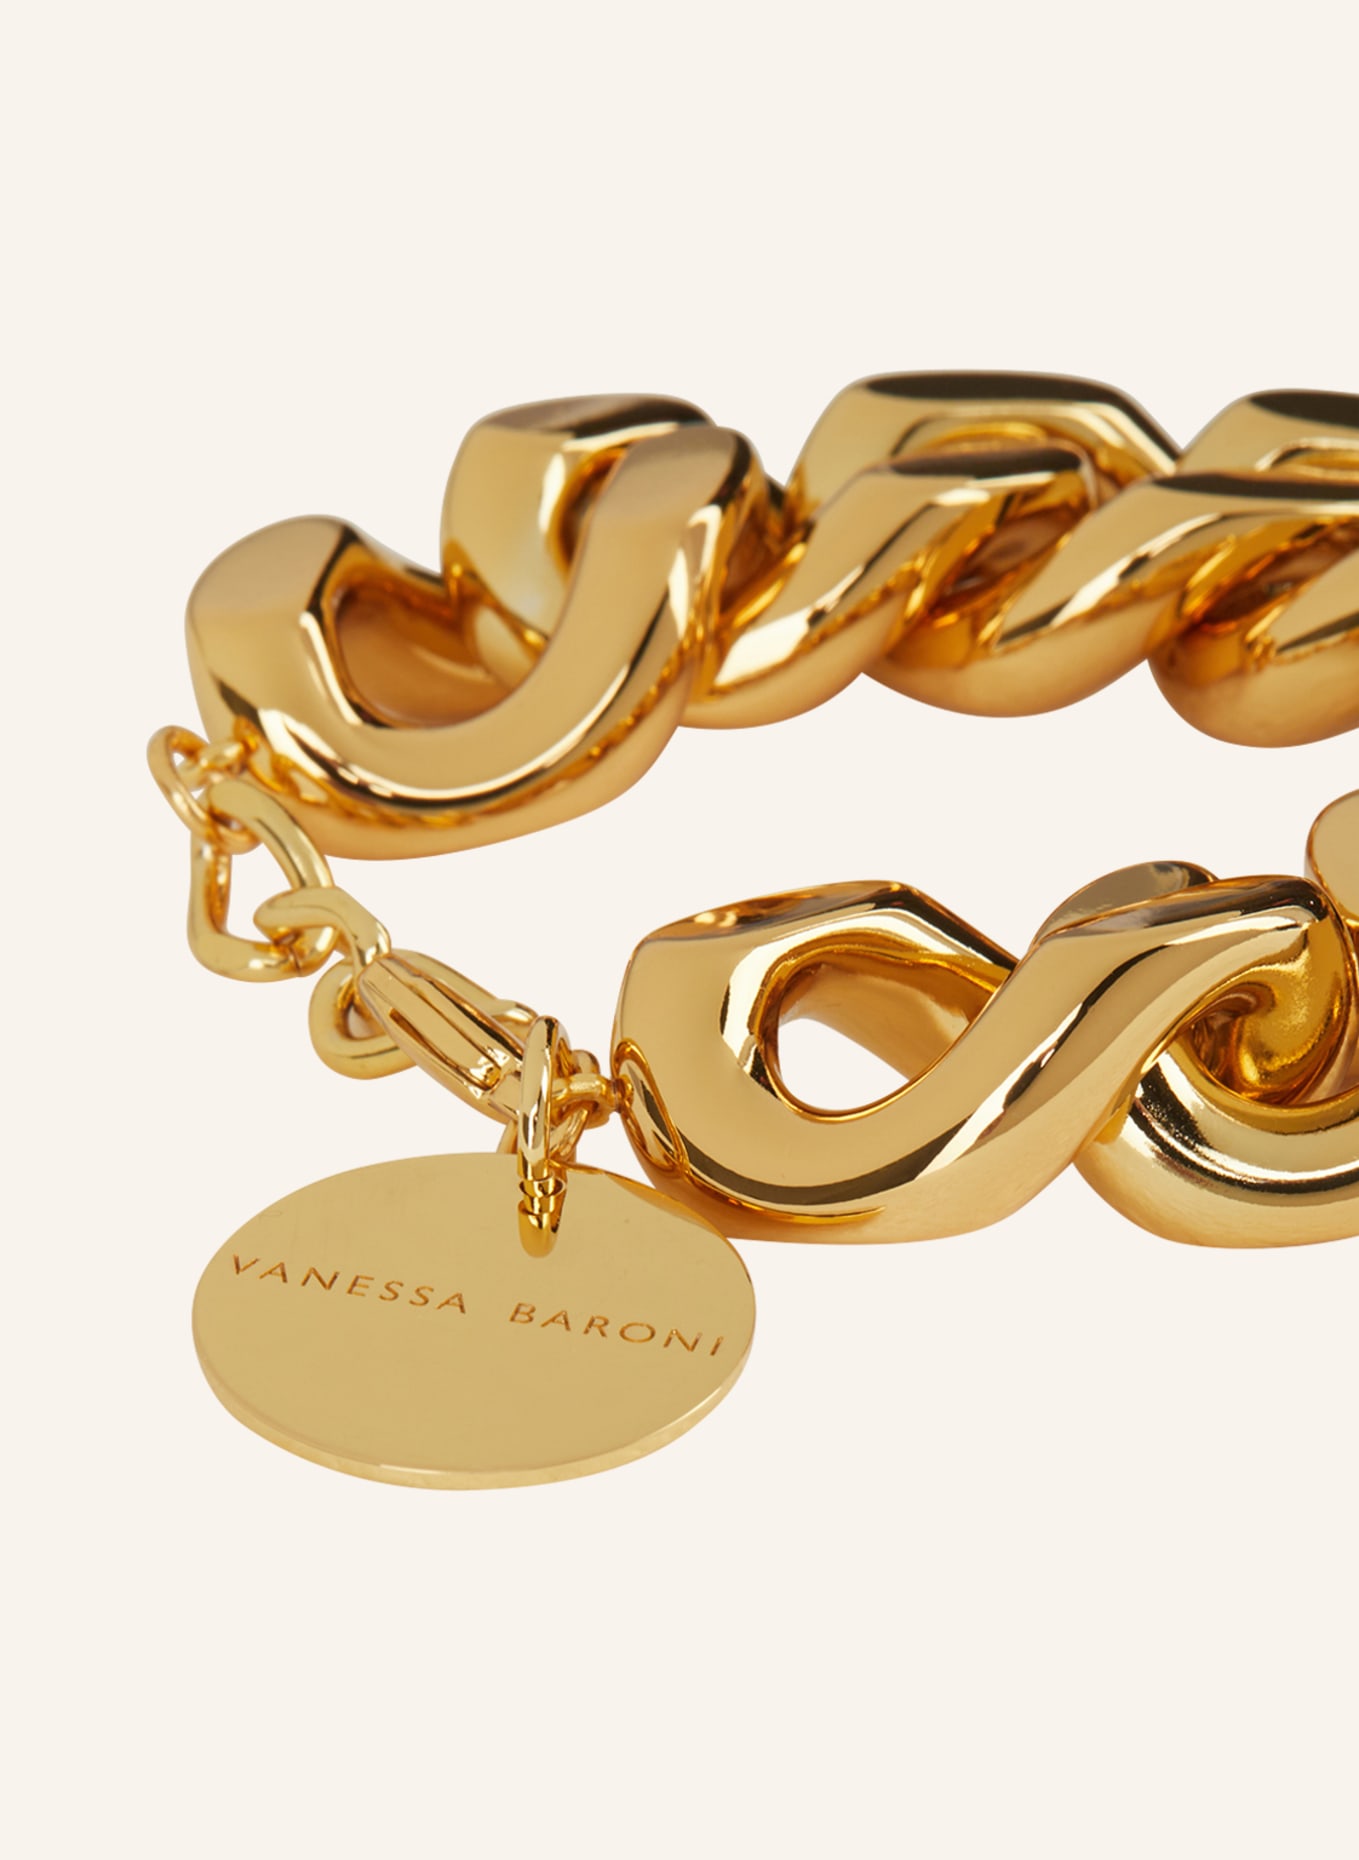 VANESSA BARONI Armband GREAT, Farbe: GOLD (Bild 2)